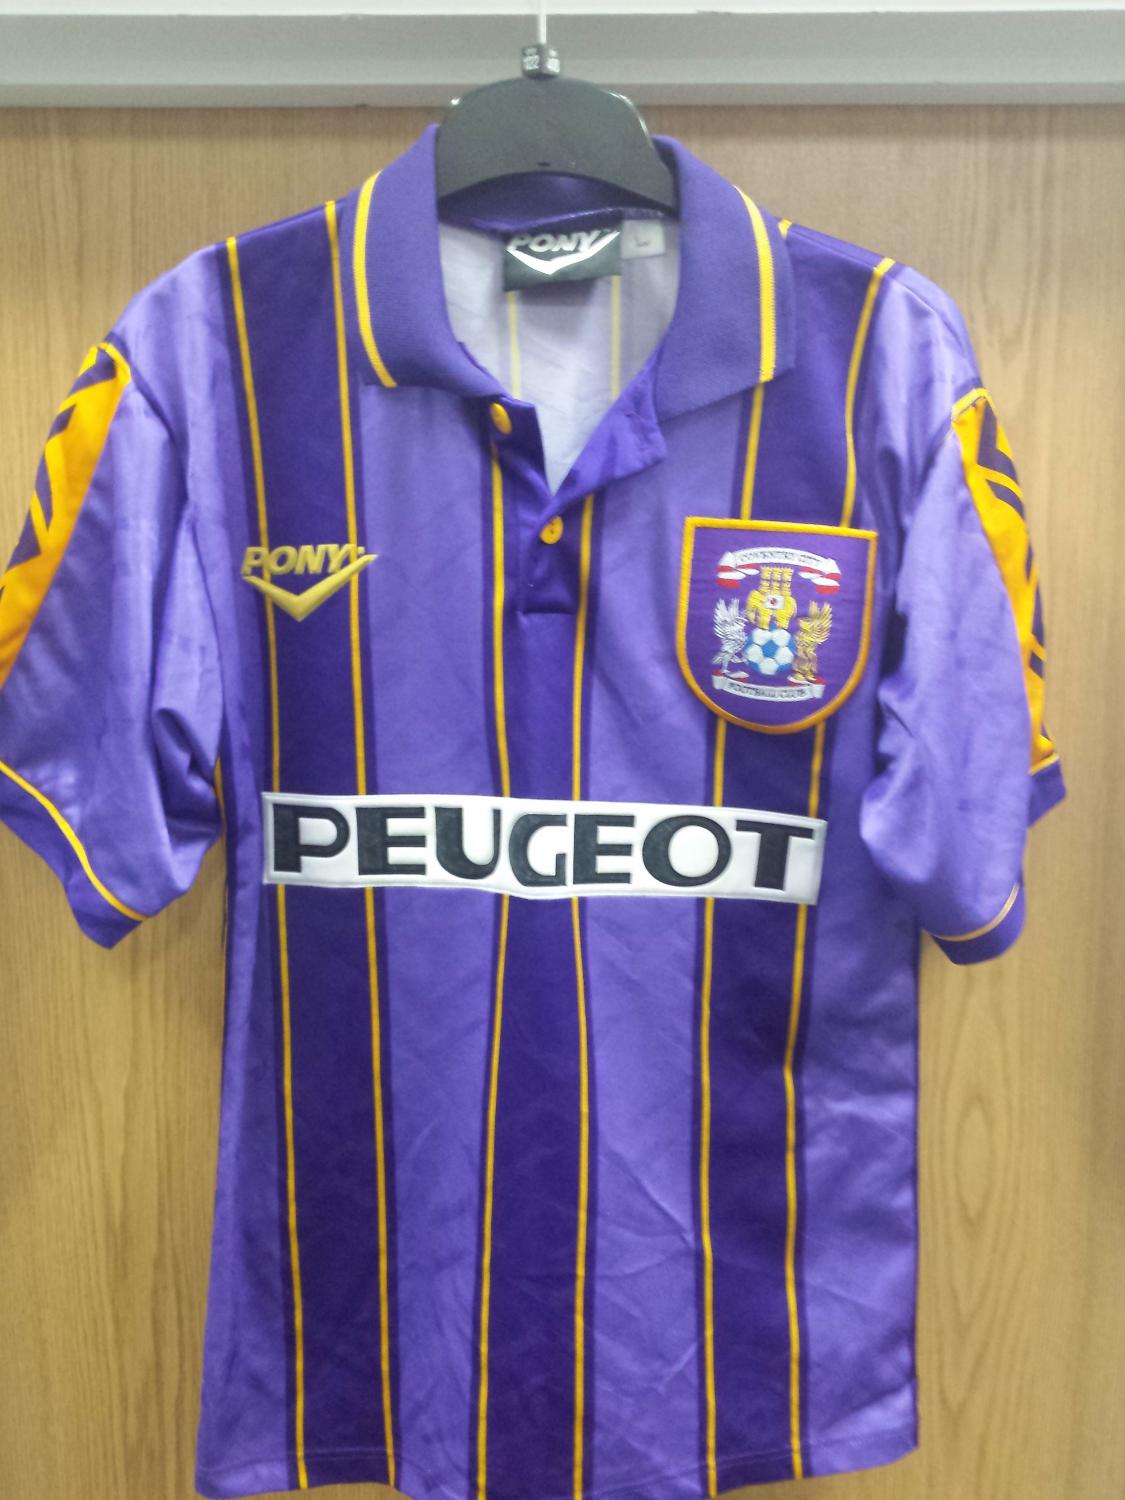 coventry-away-football-shirt-1995-1996-s_1555_1.jpg